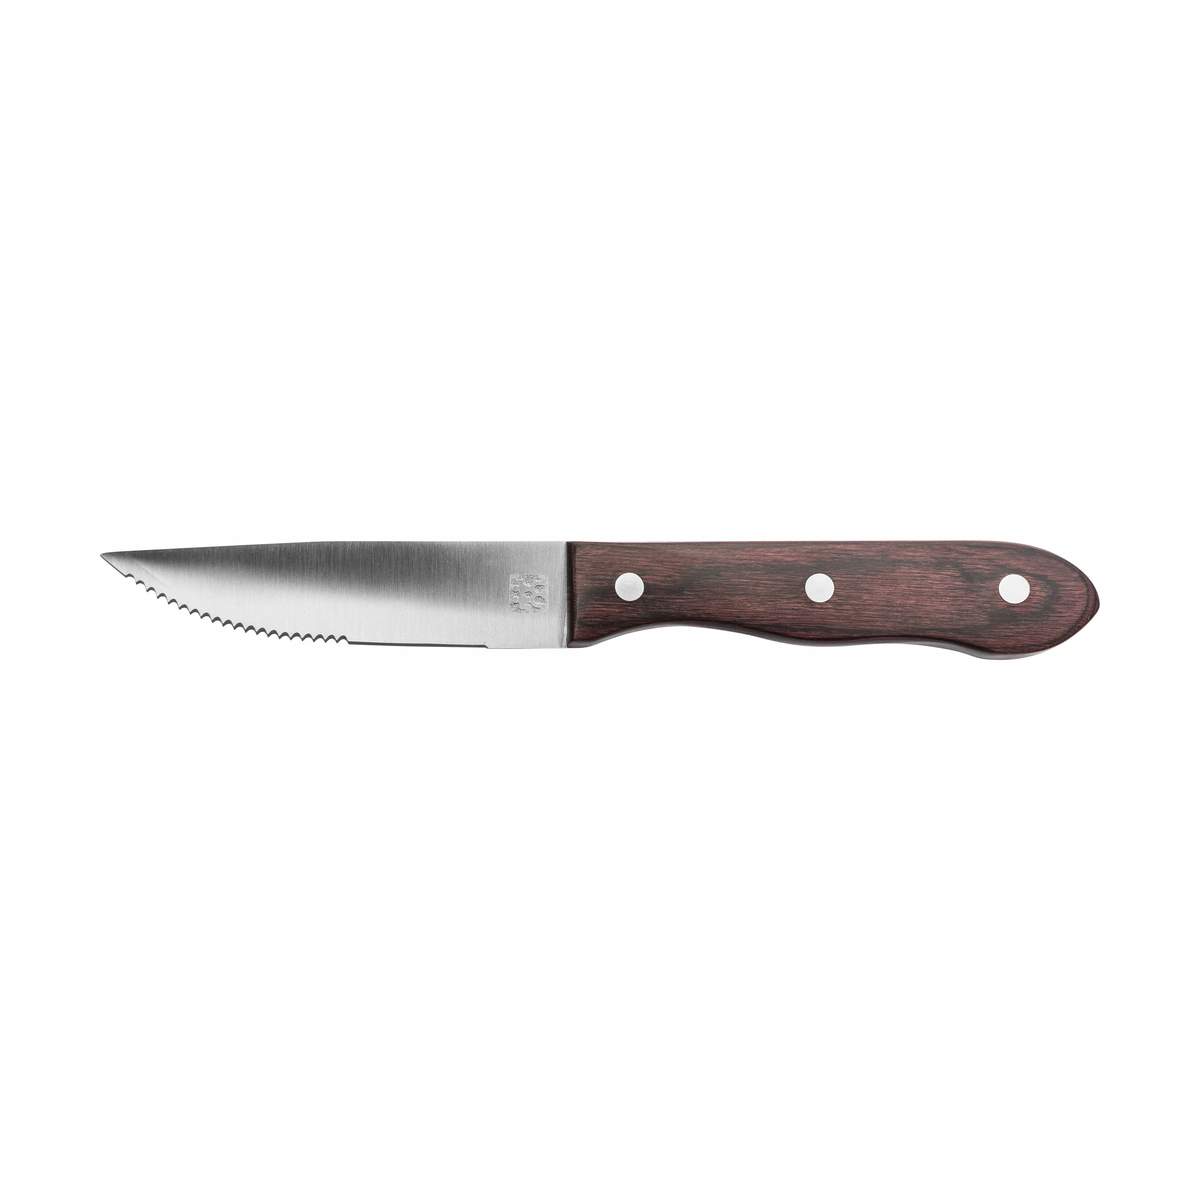 Zwilling - Steakknive - 4 dele - Rustfrit stål/træ - | Imerco